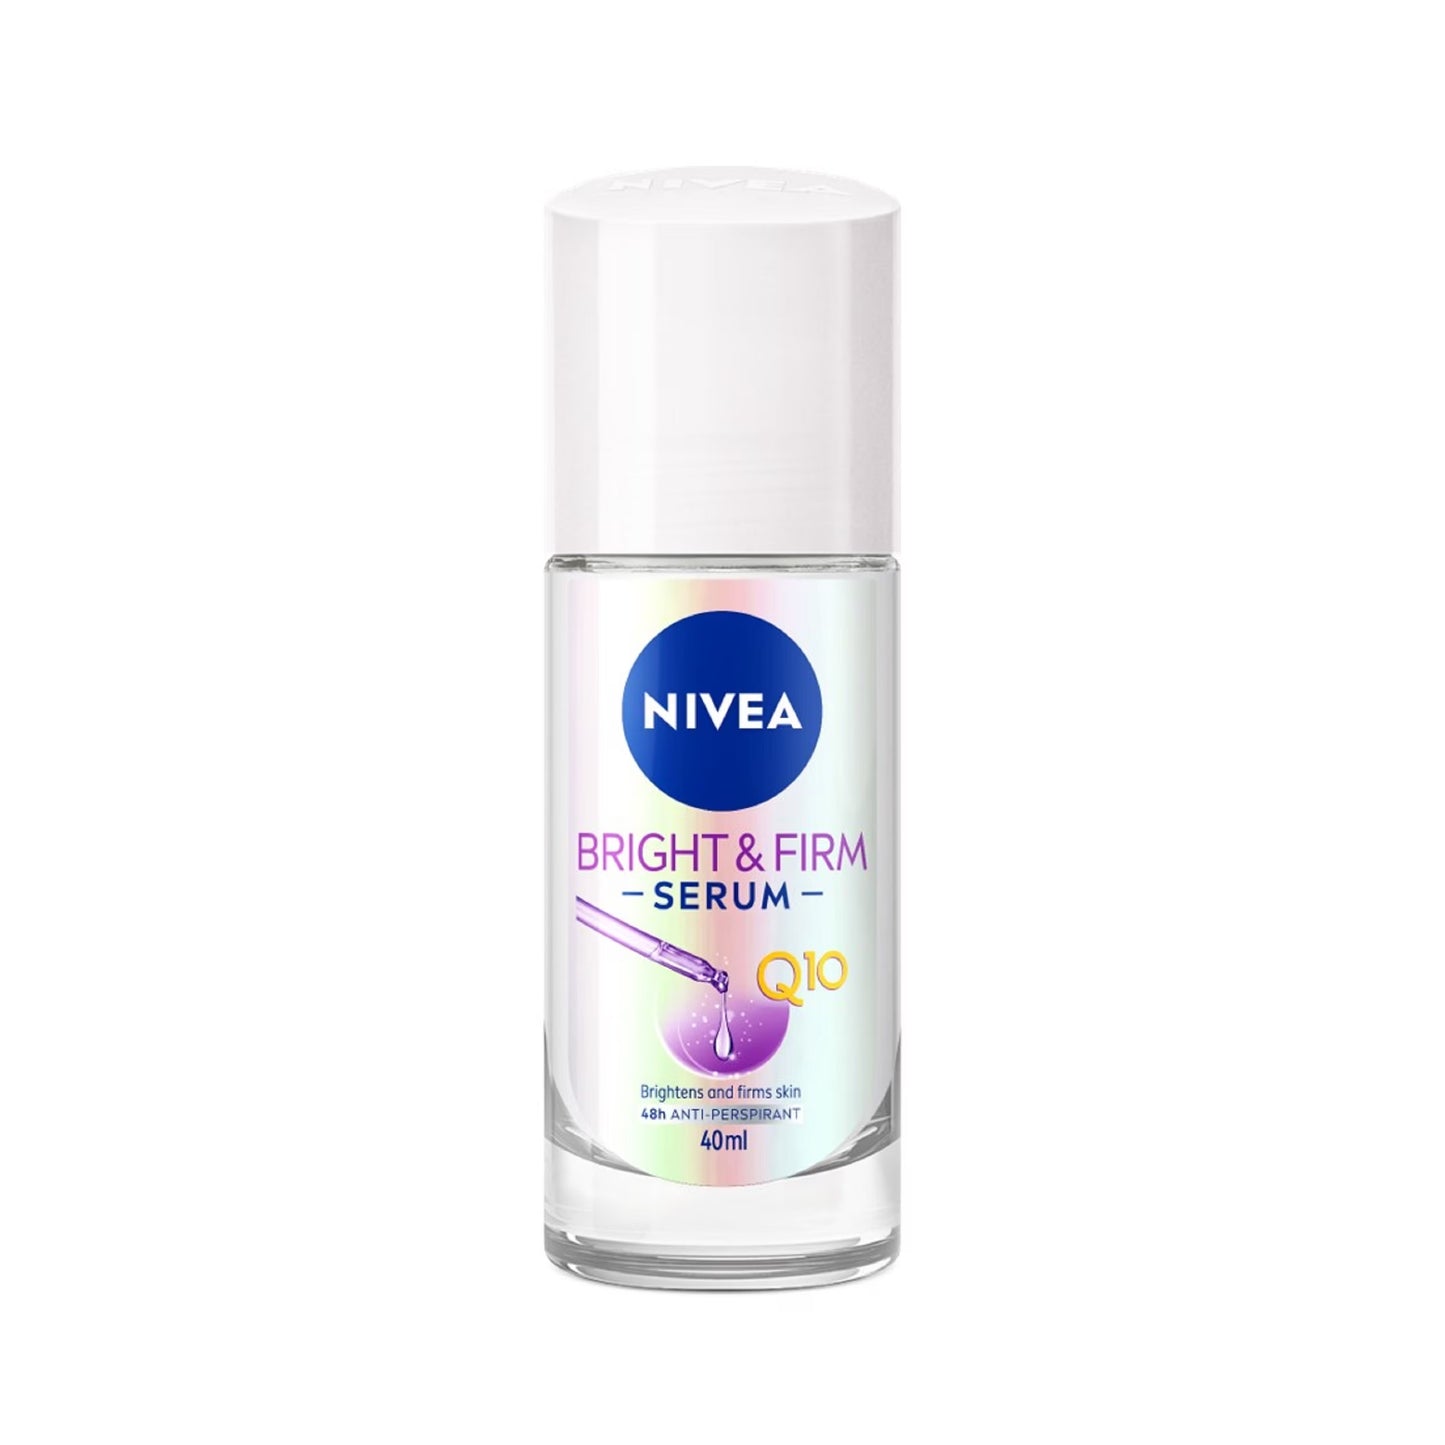 Nivea Deodorant White & Firm with Q10 Anti-Perspirant Serum Roll-on 40ml